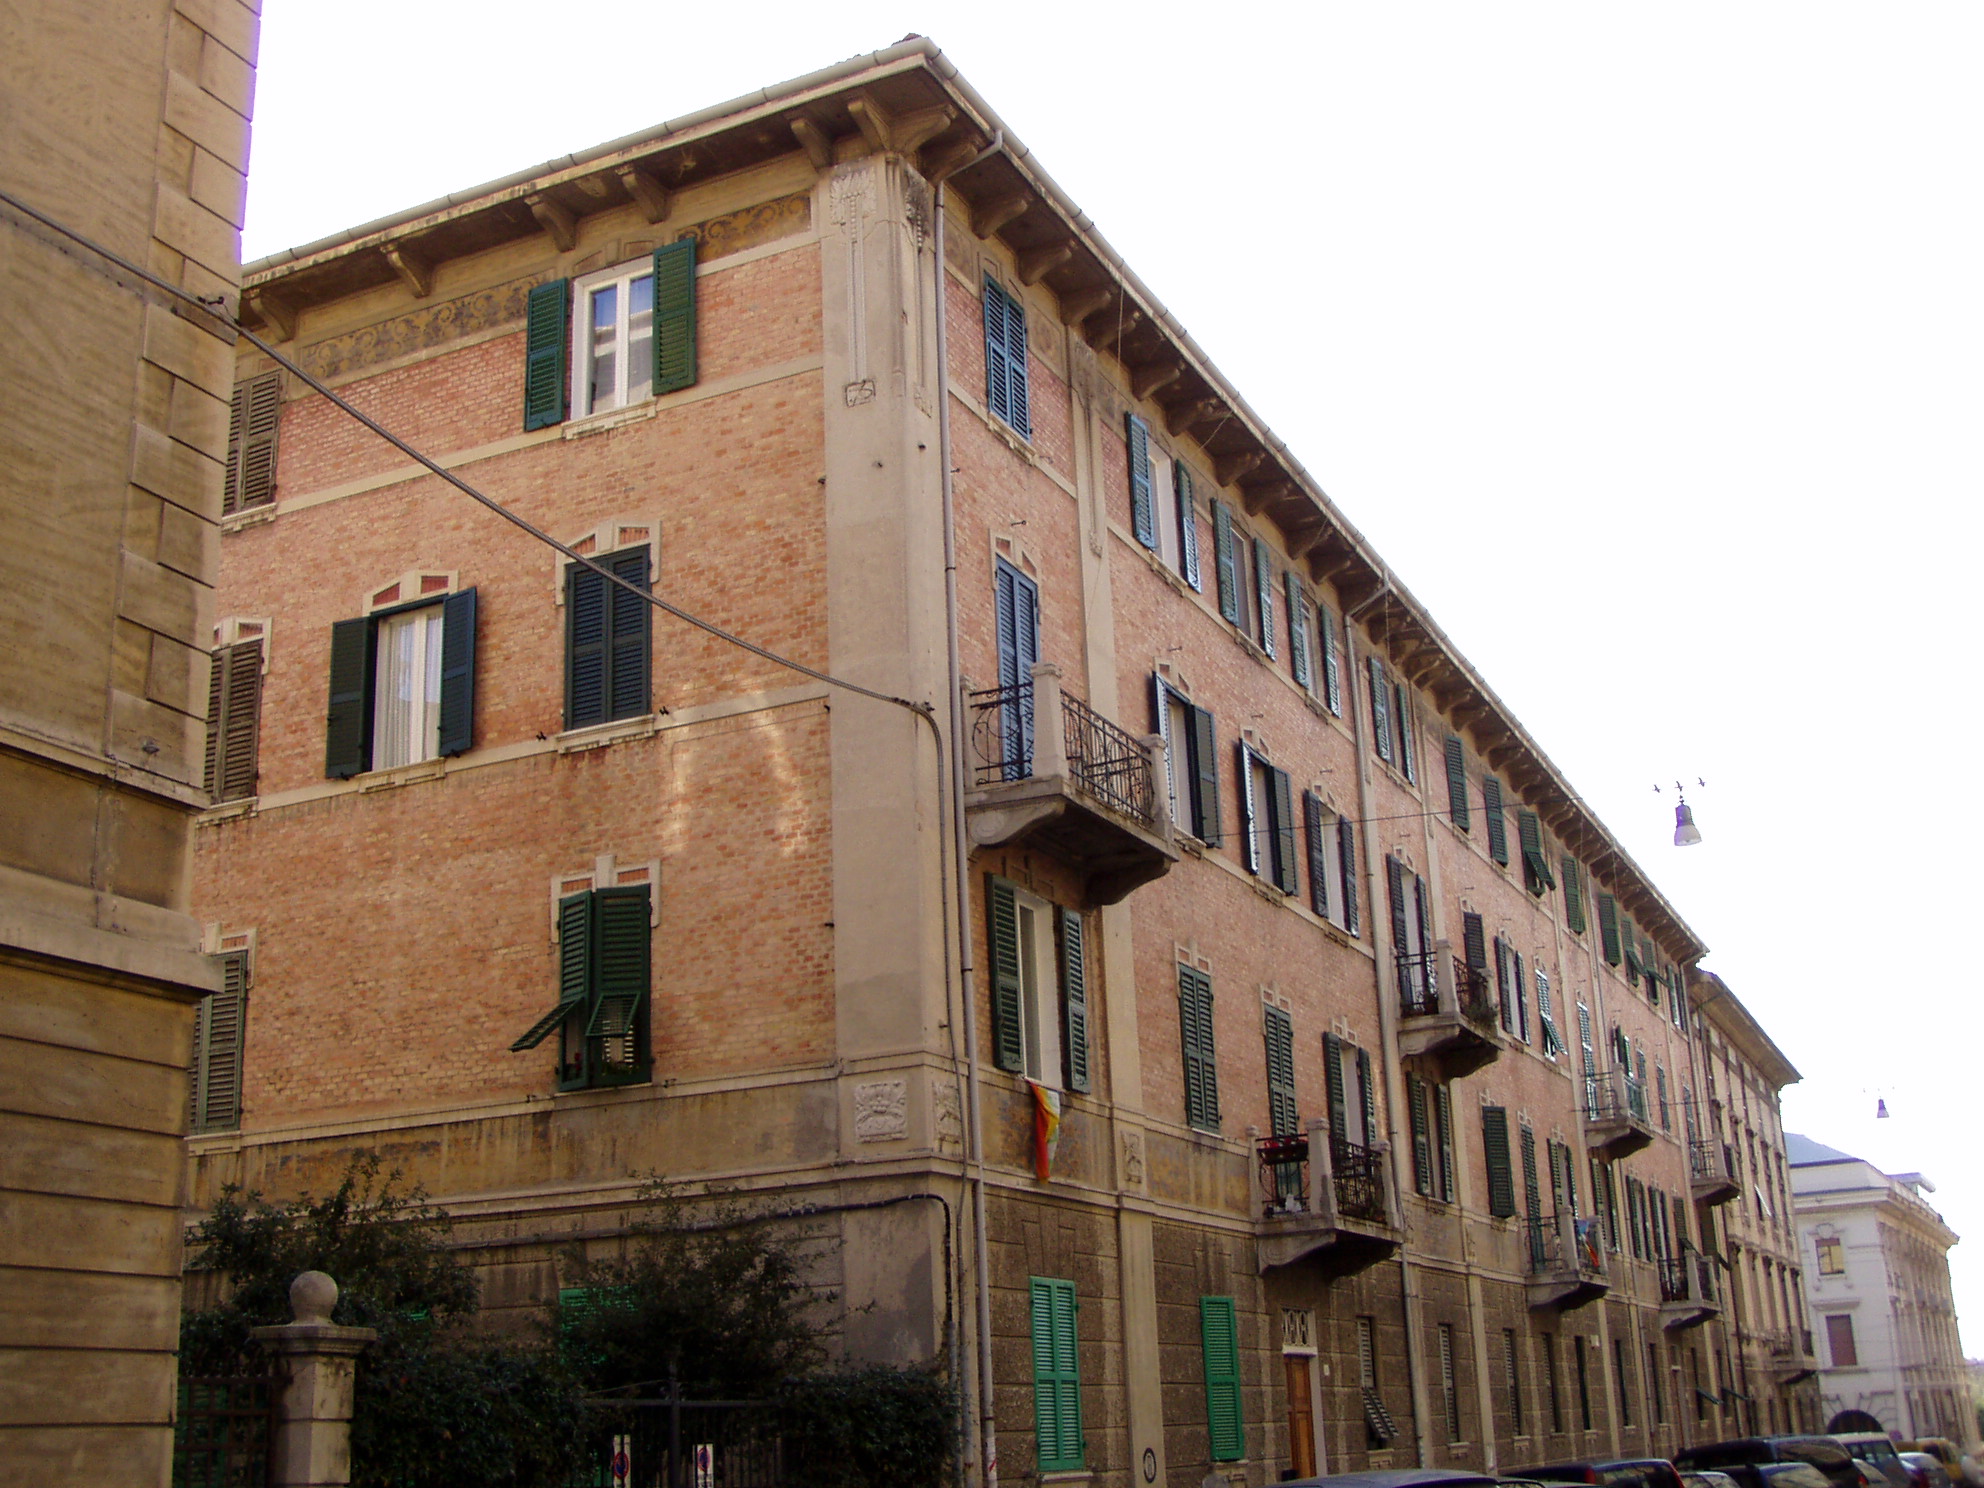 Palazzo in stile liberty (palazzo) - Ancona (AN) 